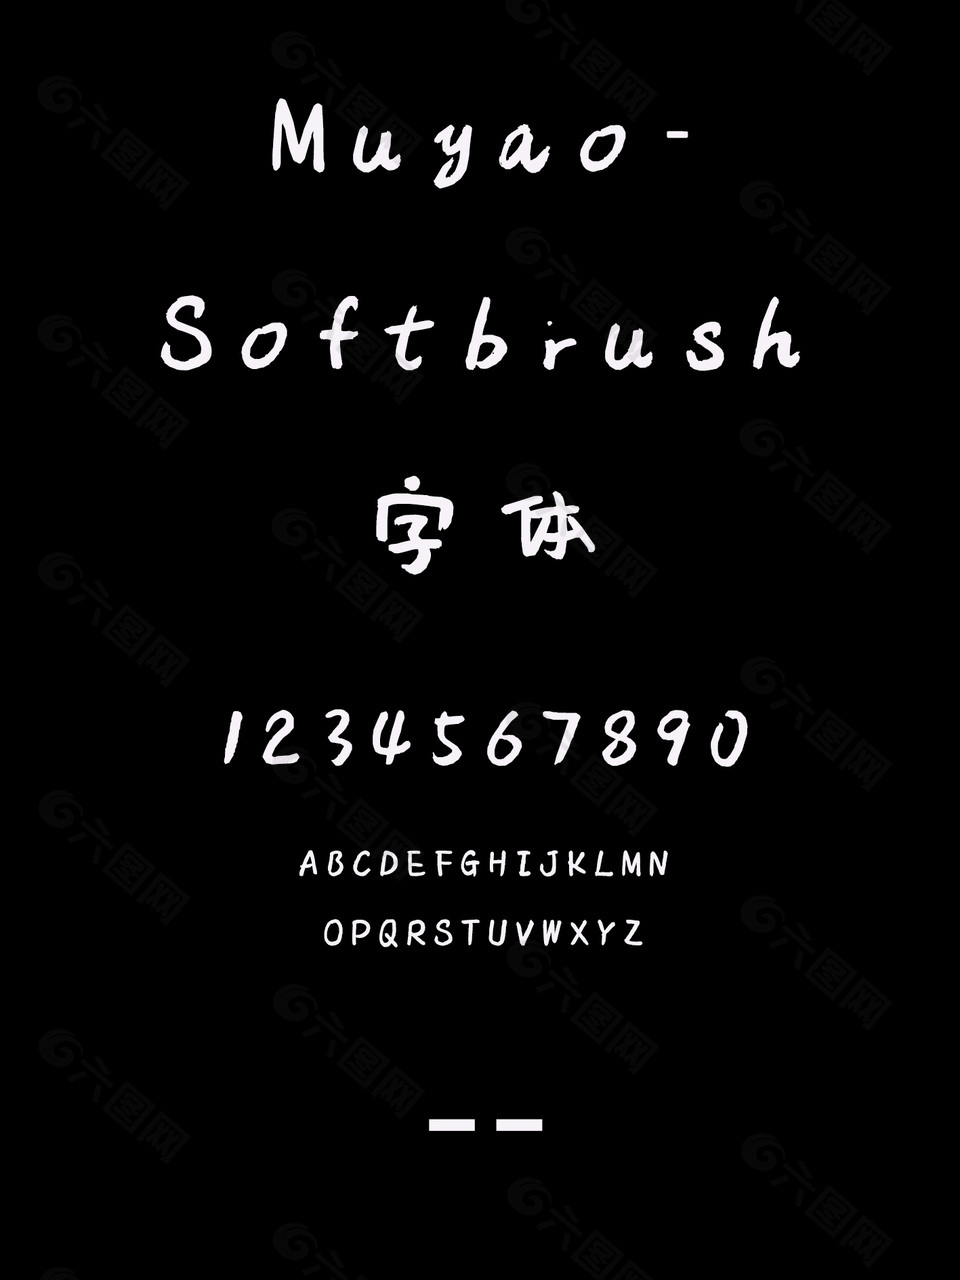 Muyao-Softbrush字体安装包